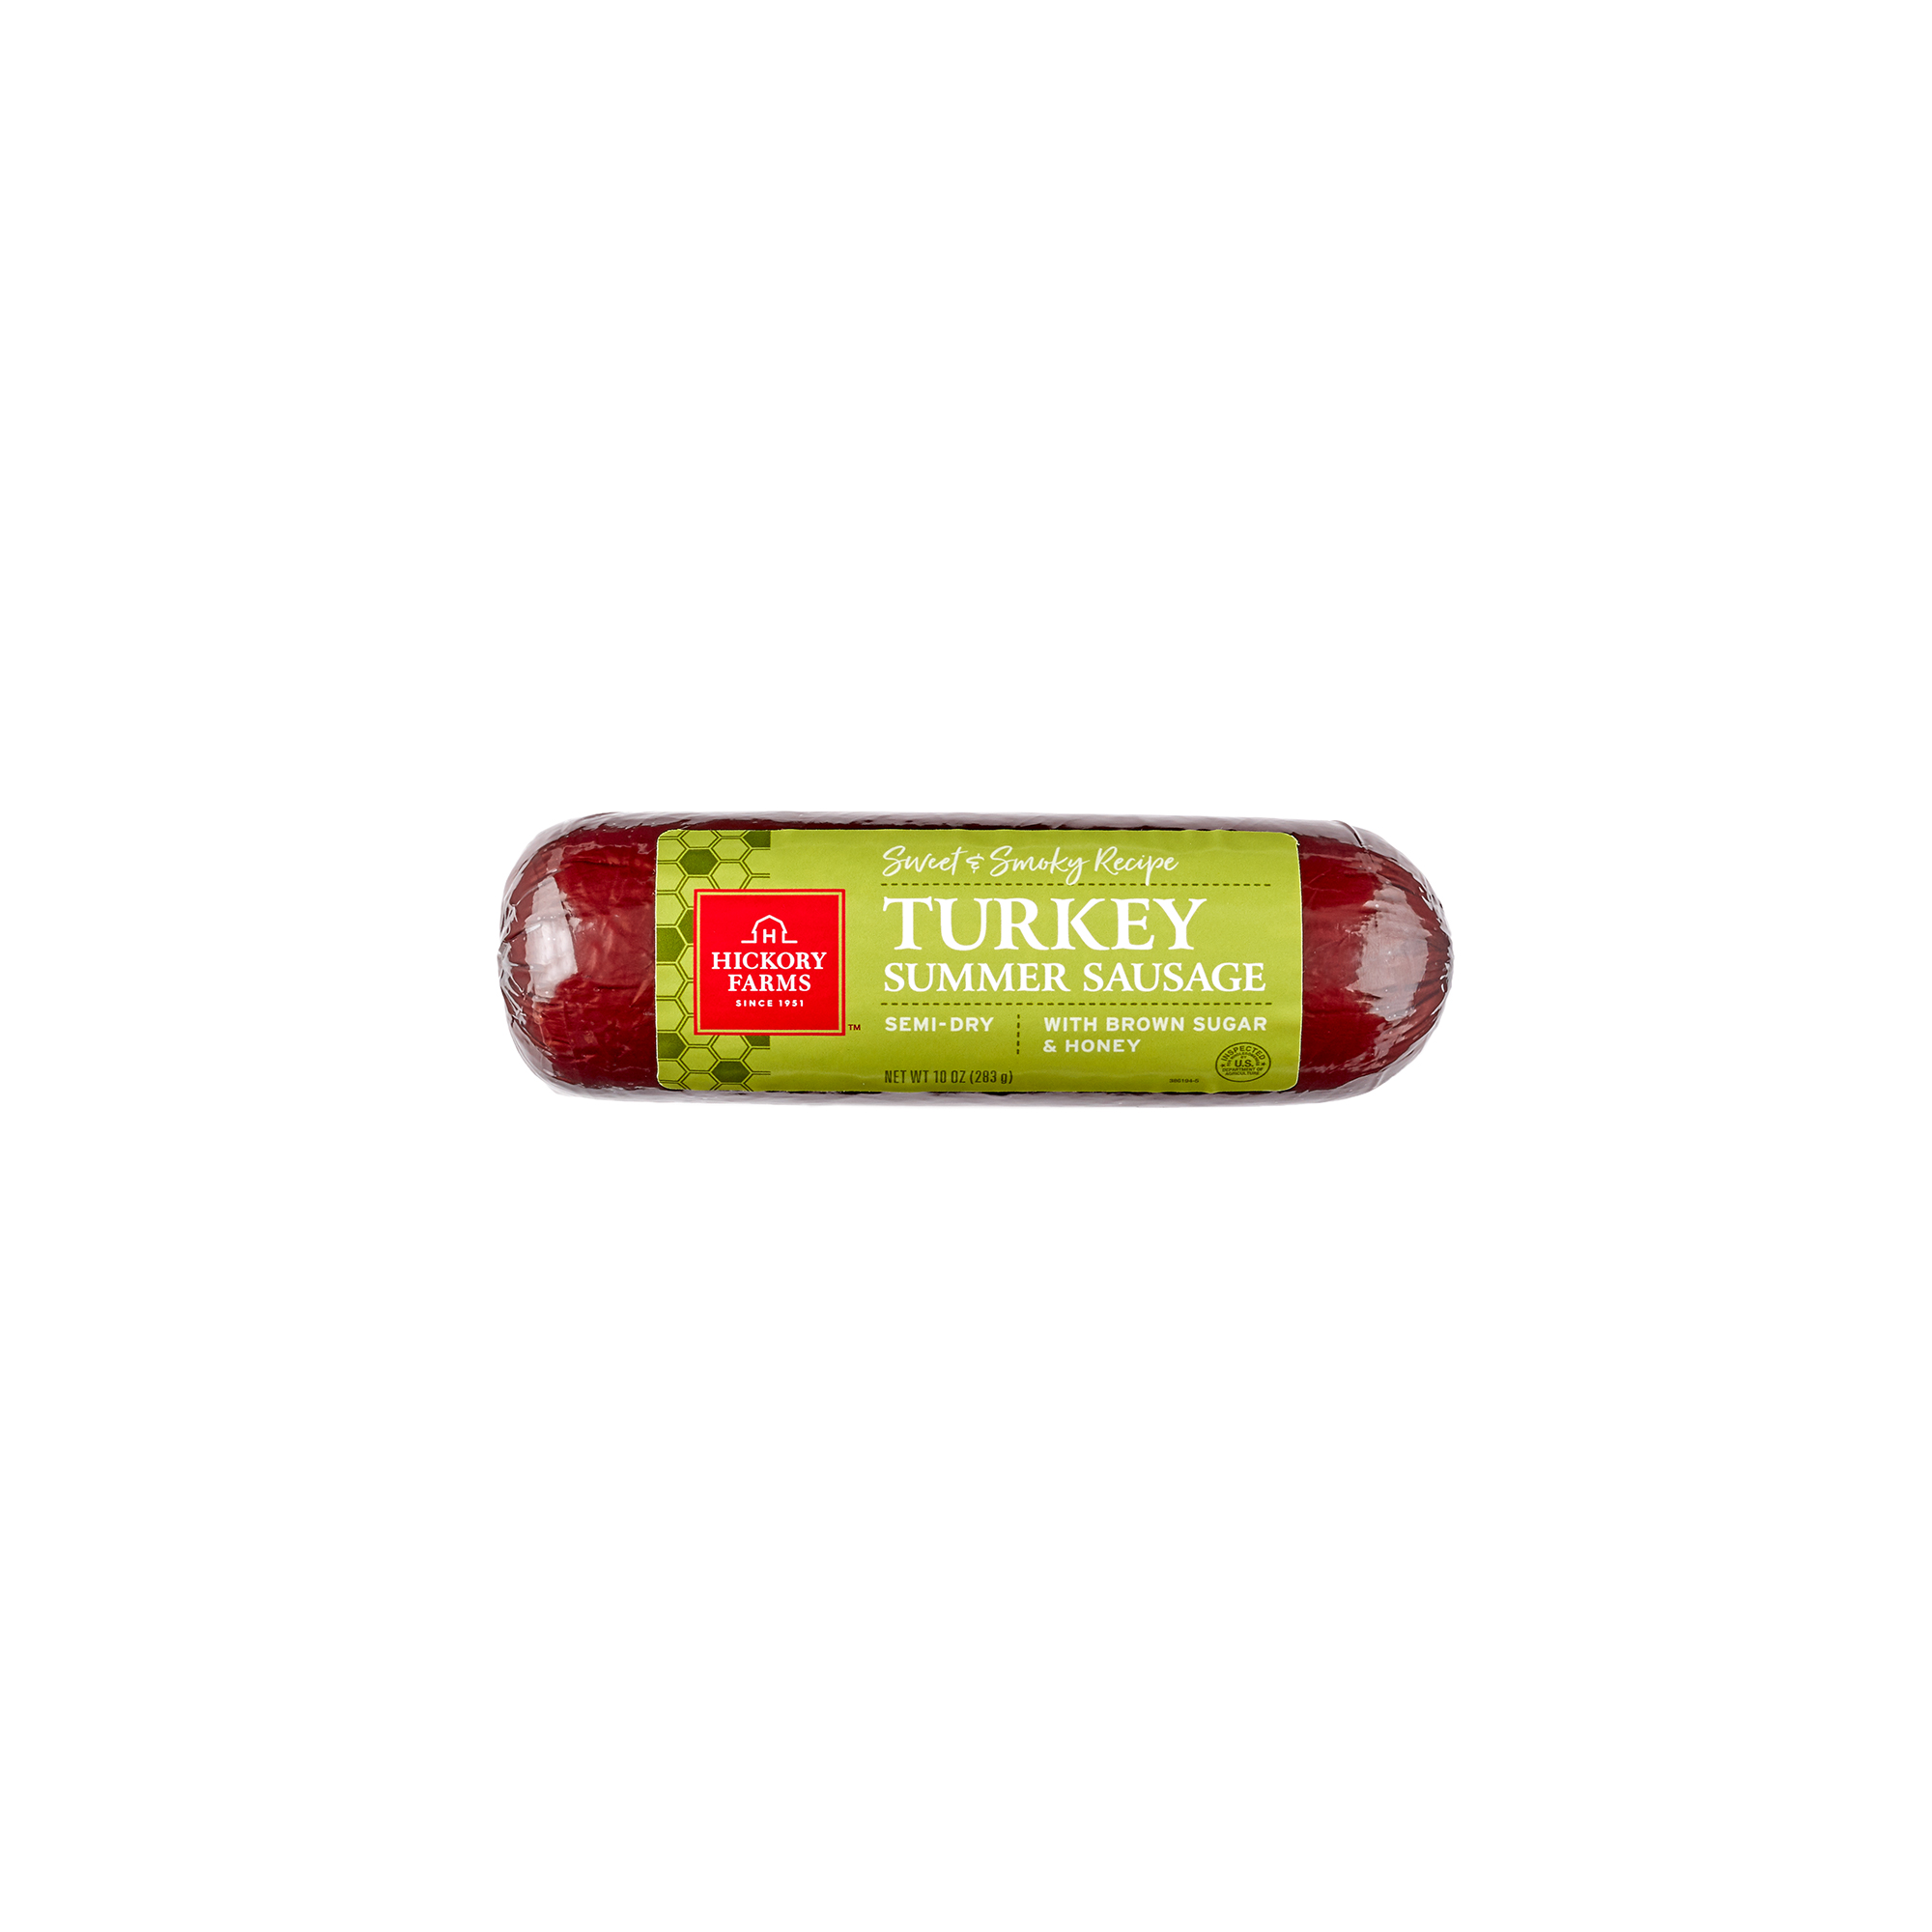 https://www.hickoryfarms.com/on/demandware.static/-/Sites-Web-Master-Catalog/default/dwc50f7bfe/images/products/10oz-sweet-smoky-turkey-summer-sausage-003136-silo.jpg